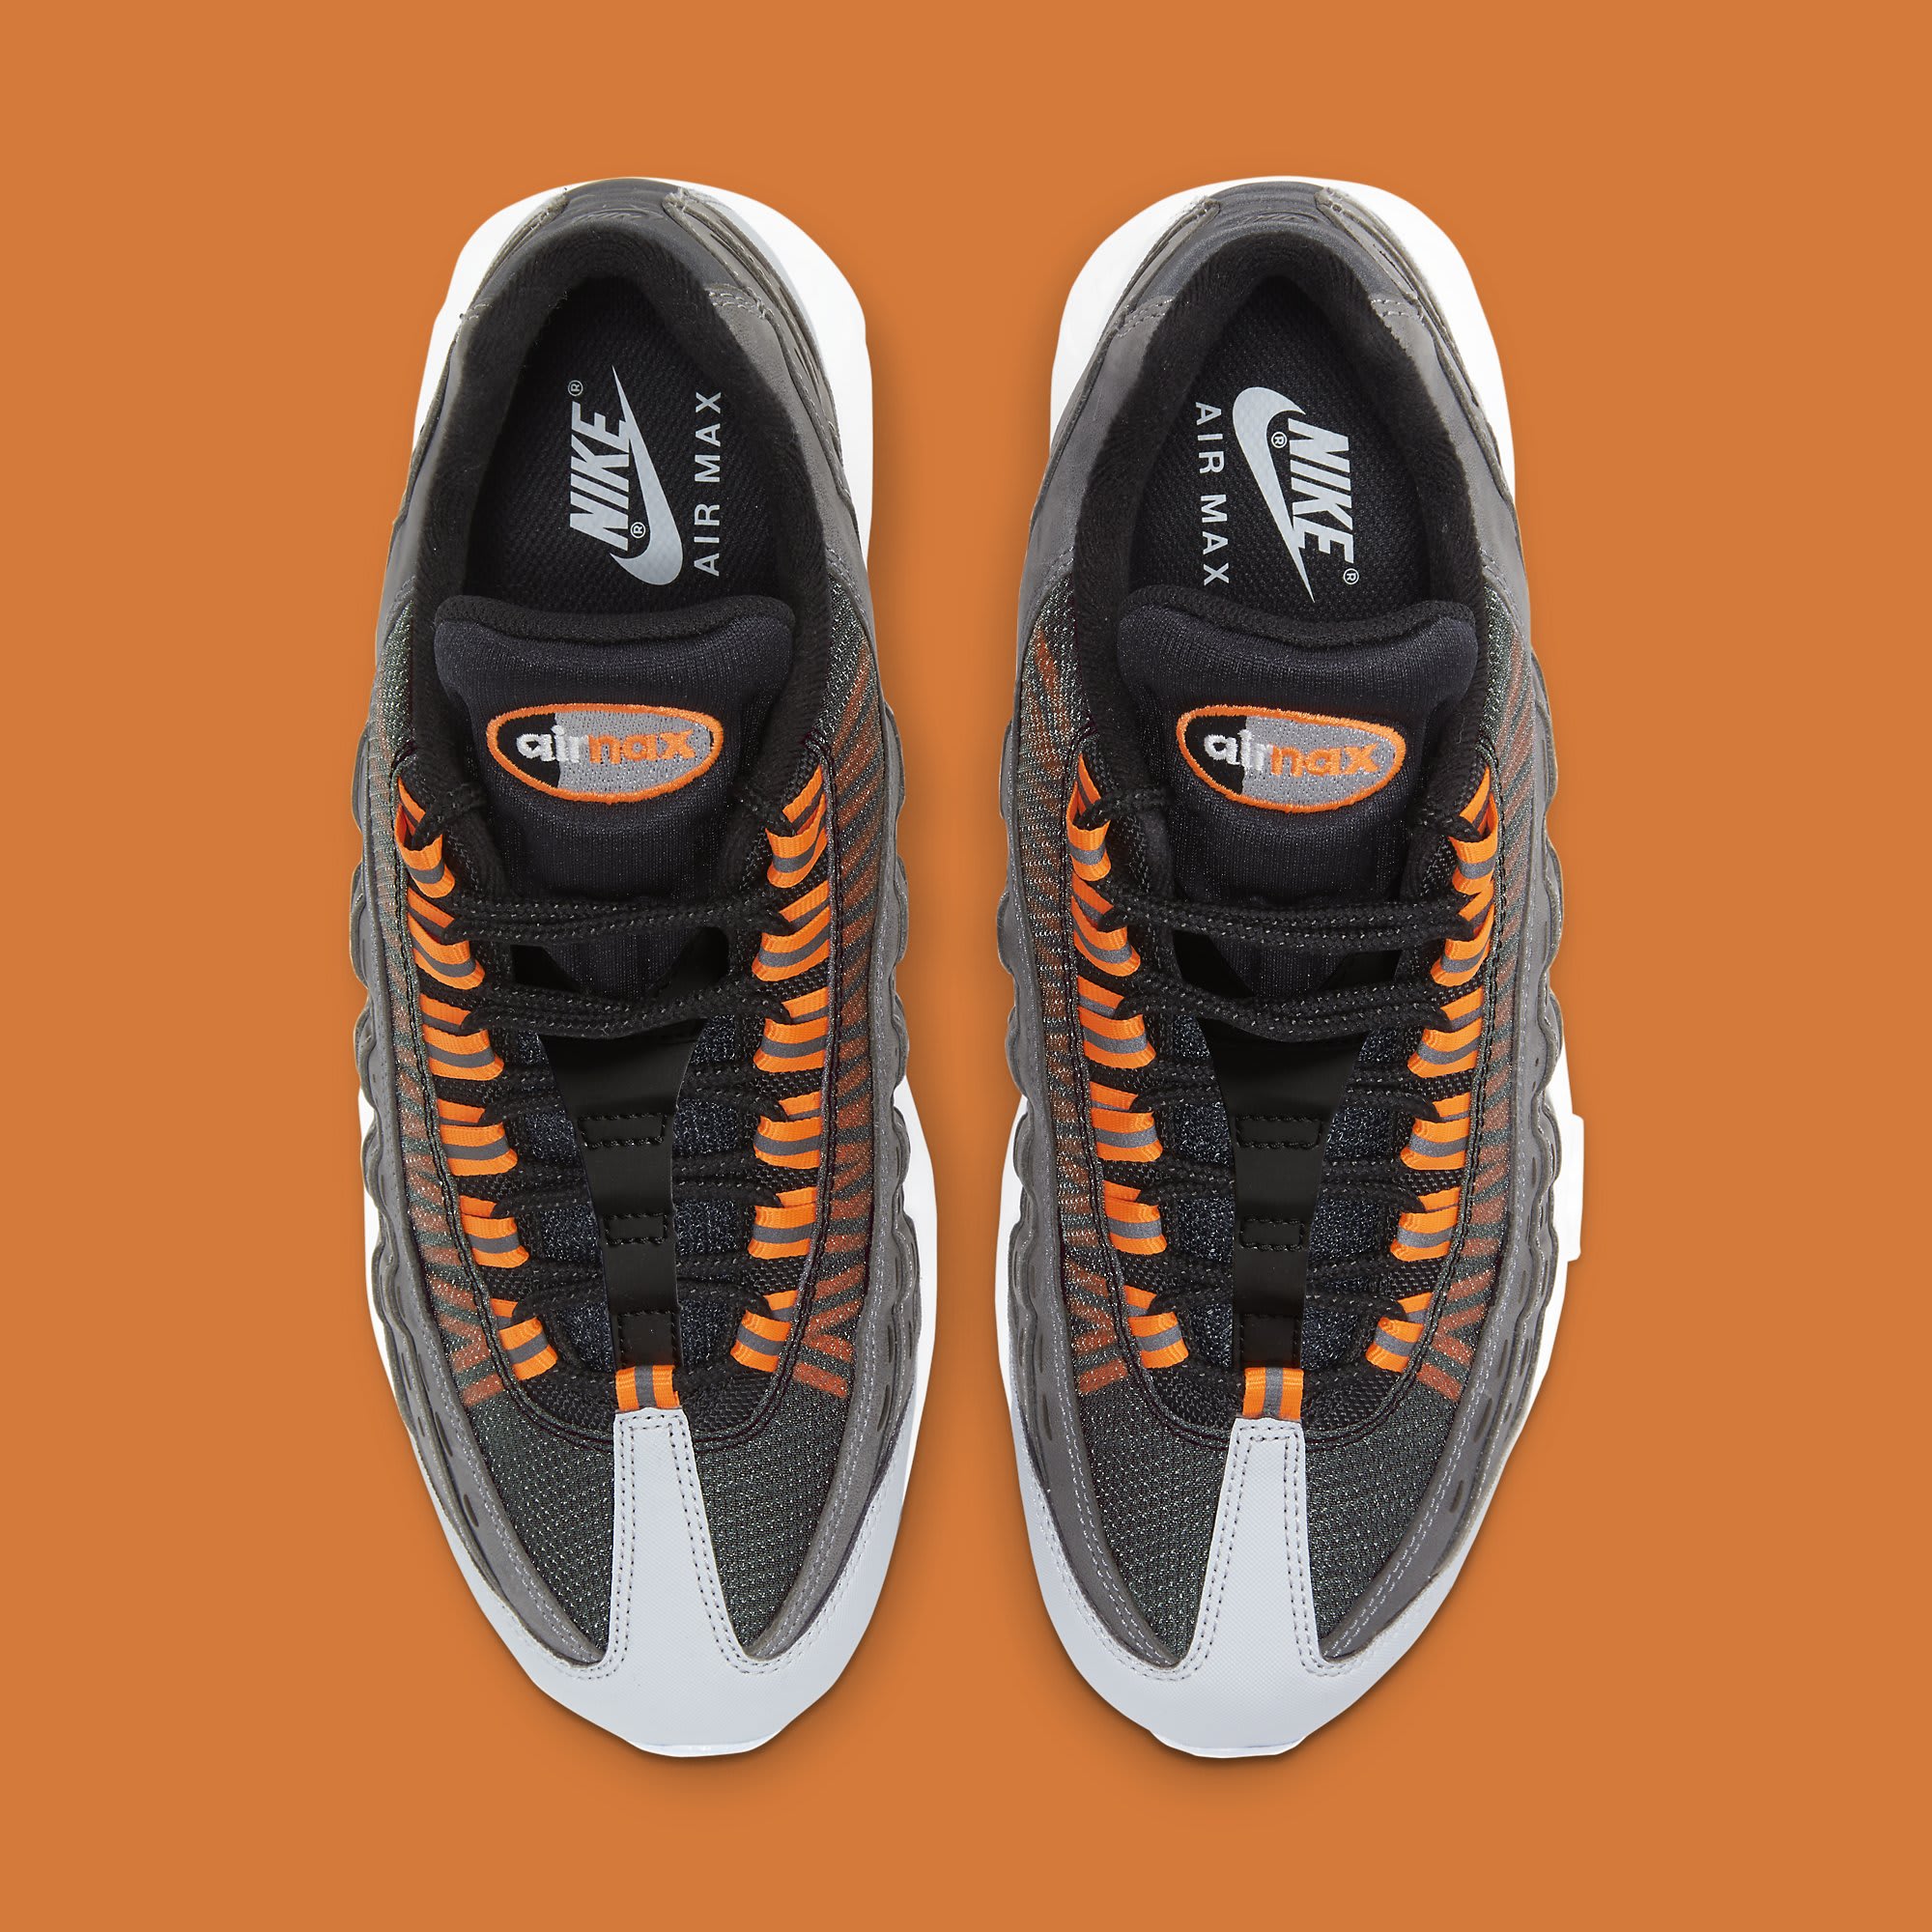 Kim Jones x Nike Air Max 95 Orange Release Date DD1871-001 Top